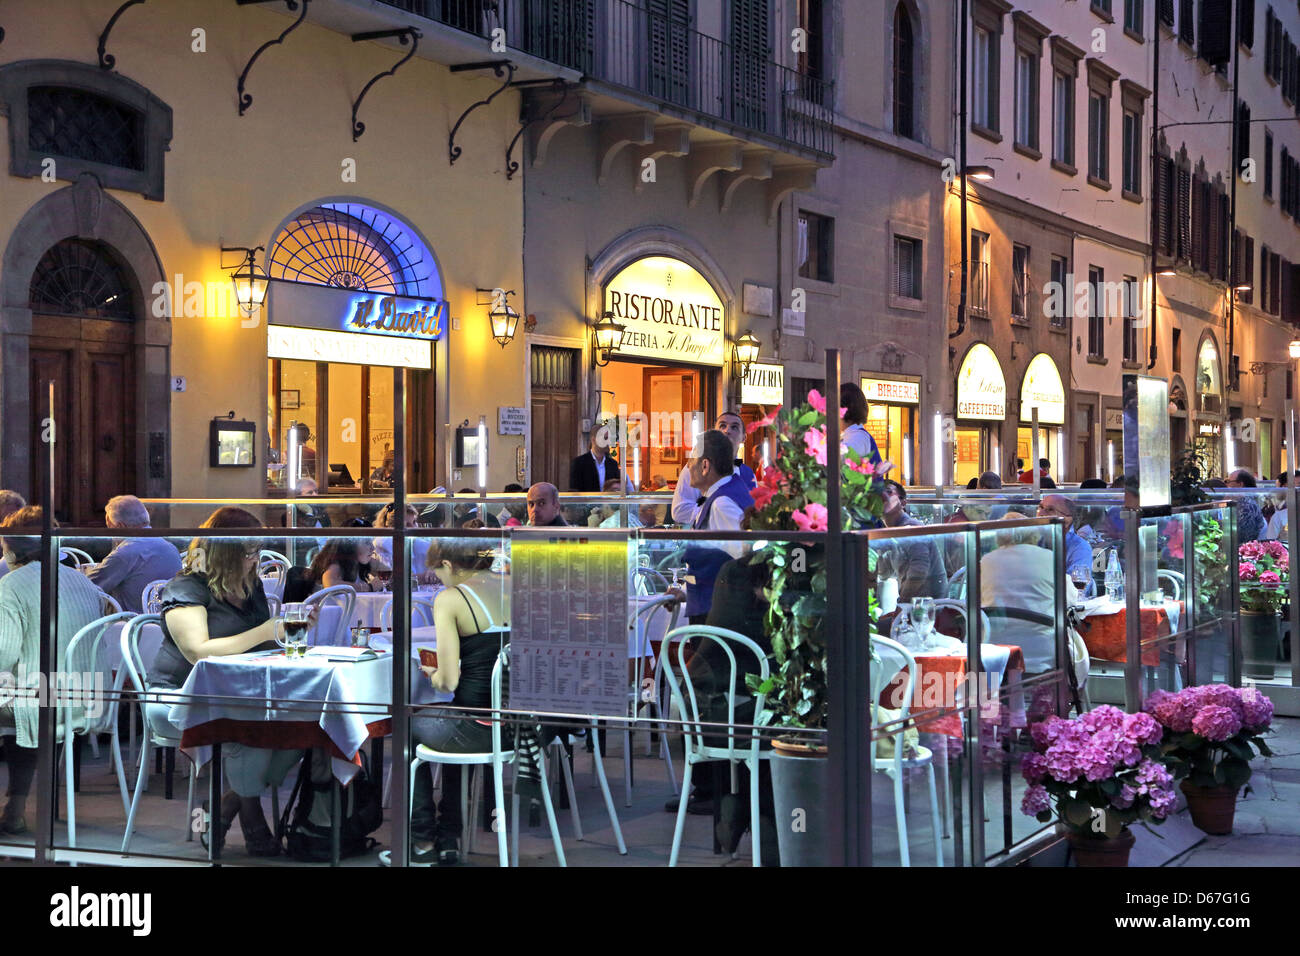 Restaurants in Piazza della Signoria at night in Florence Italy Stock Photo